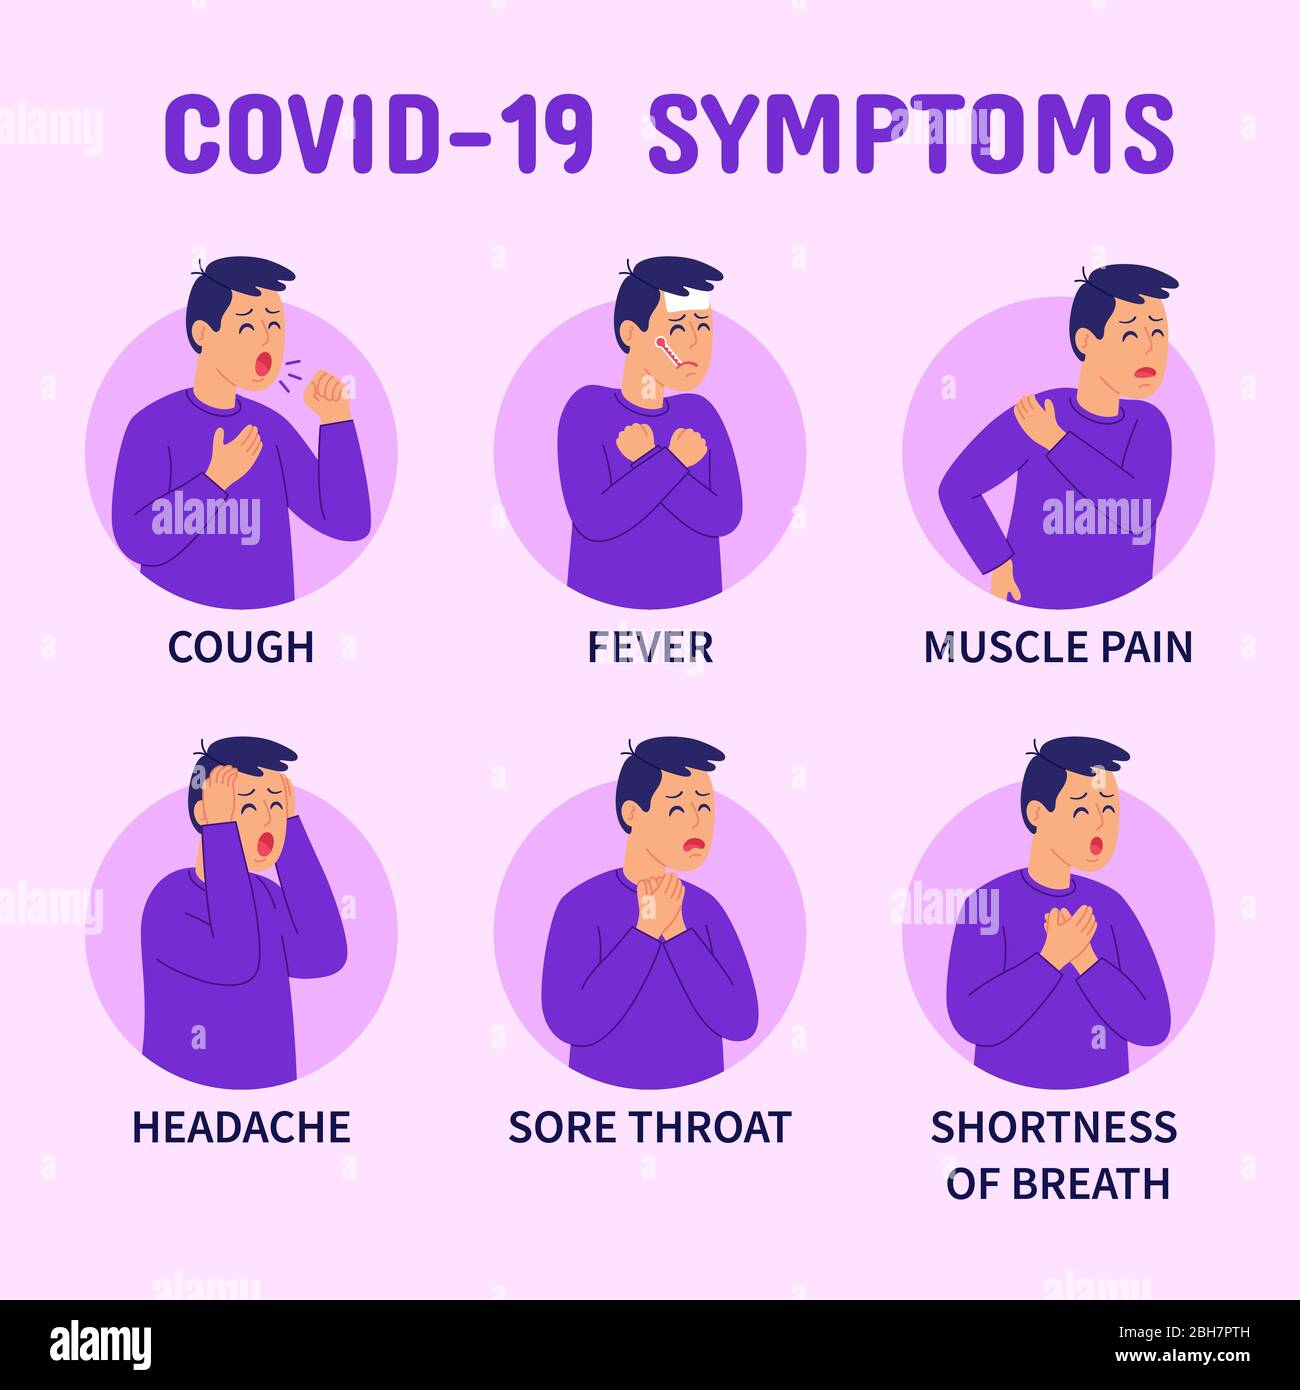 Coronavirus COVID-19 Symptome Infografiken. Symptome : Husten, Fieber, Muskelschmerzen, Kopfschmerzen, Halsschmerzen, Atemnot. Stock Vektor